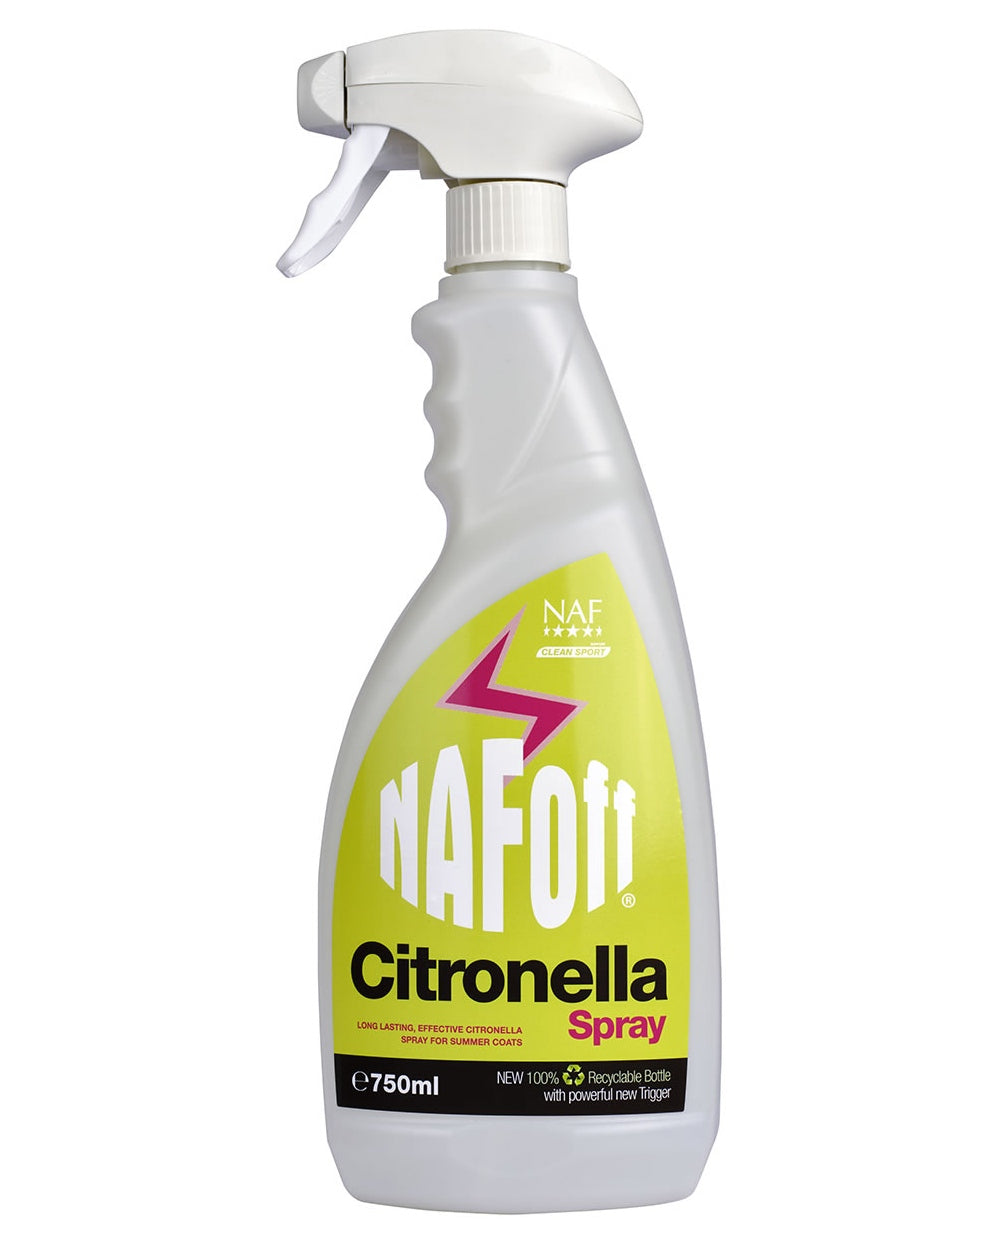 NAF Off Citronella Spray 750ML on white background